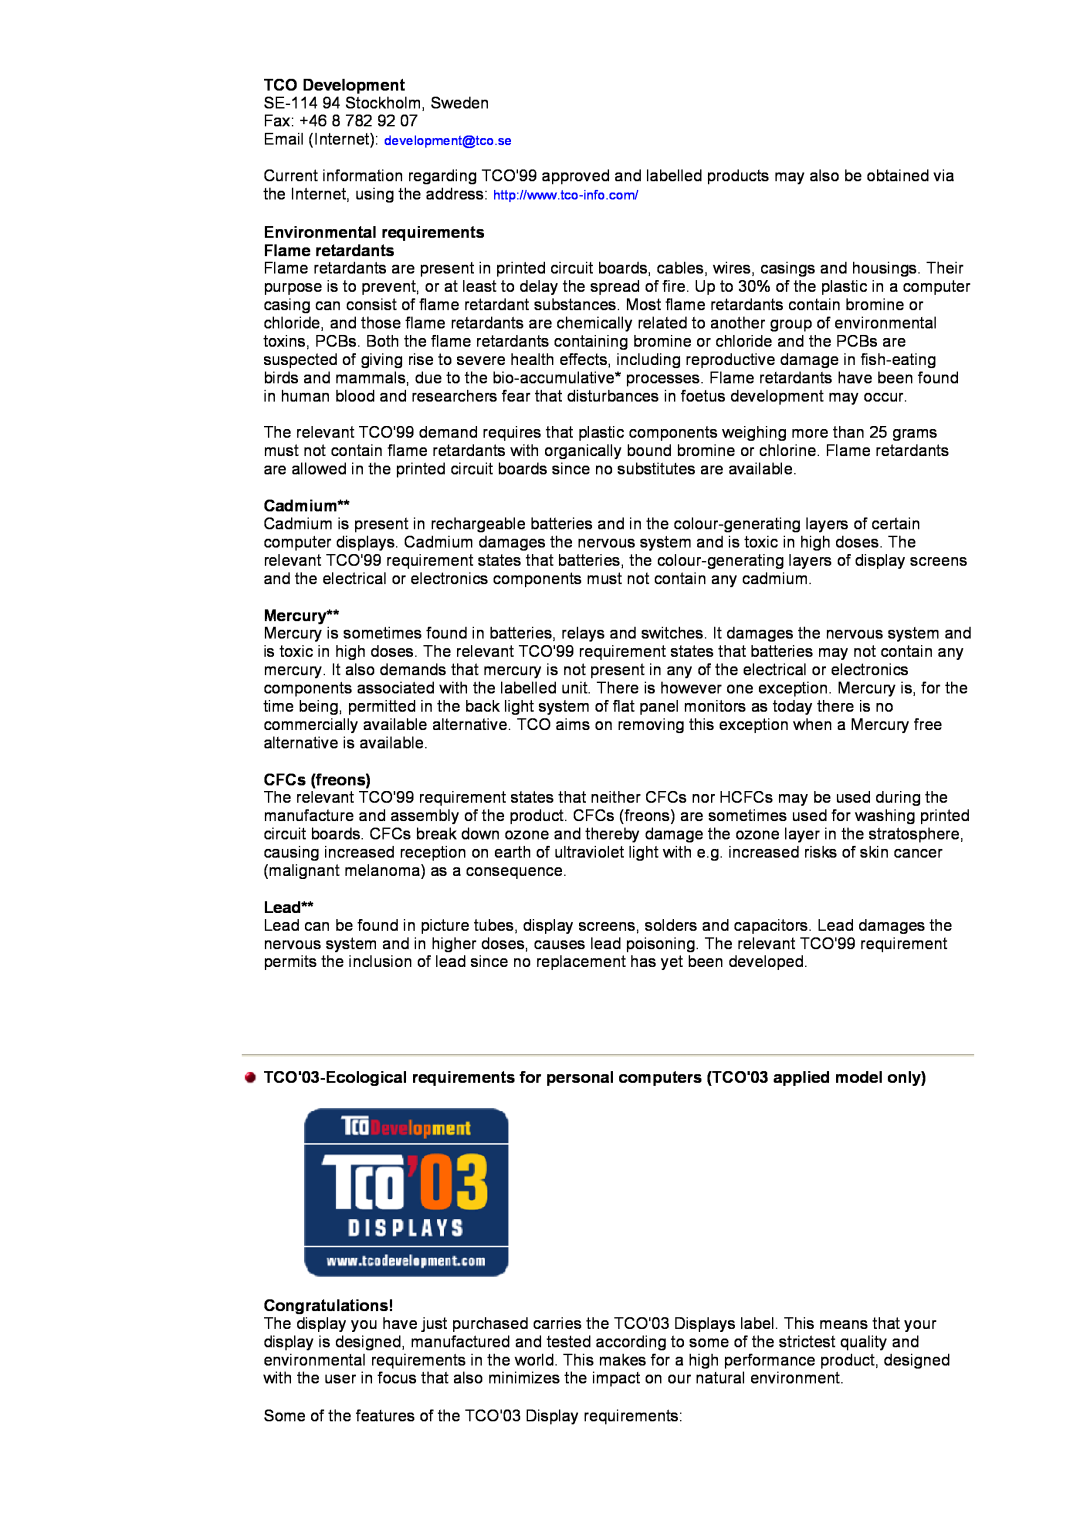 Samsung 153S manual TCO Development, Environmental requirements Flame retardants, Cadmium, Mercury, CFCs freons, Lead 